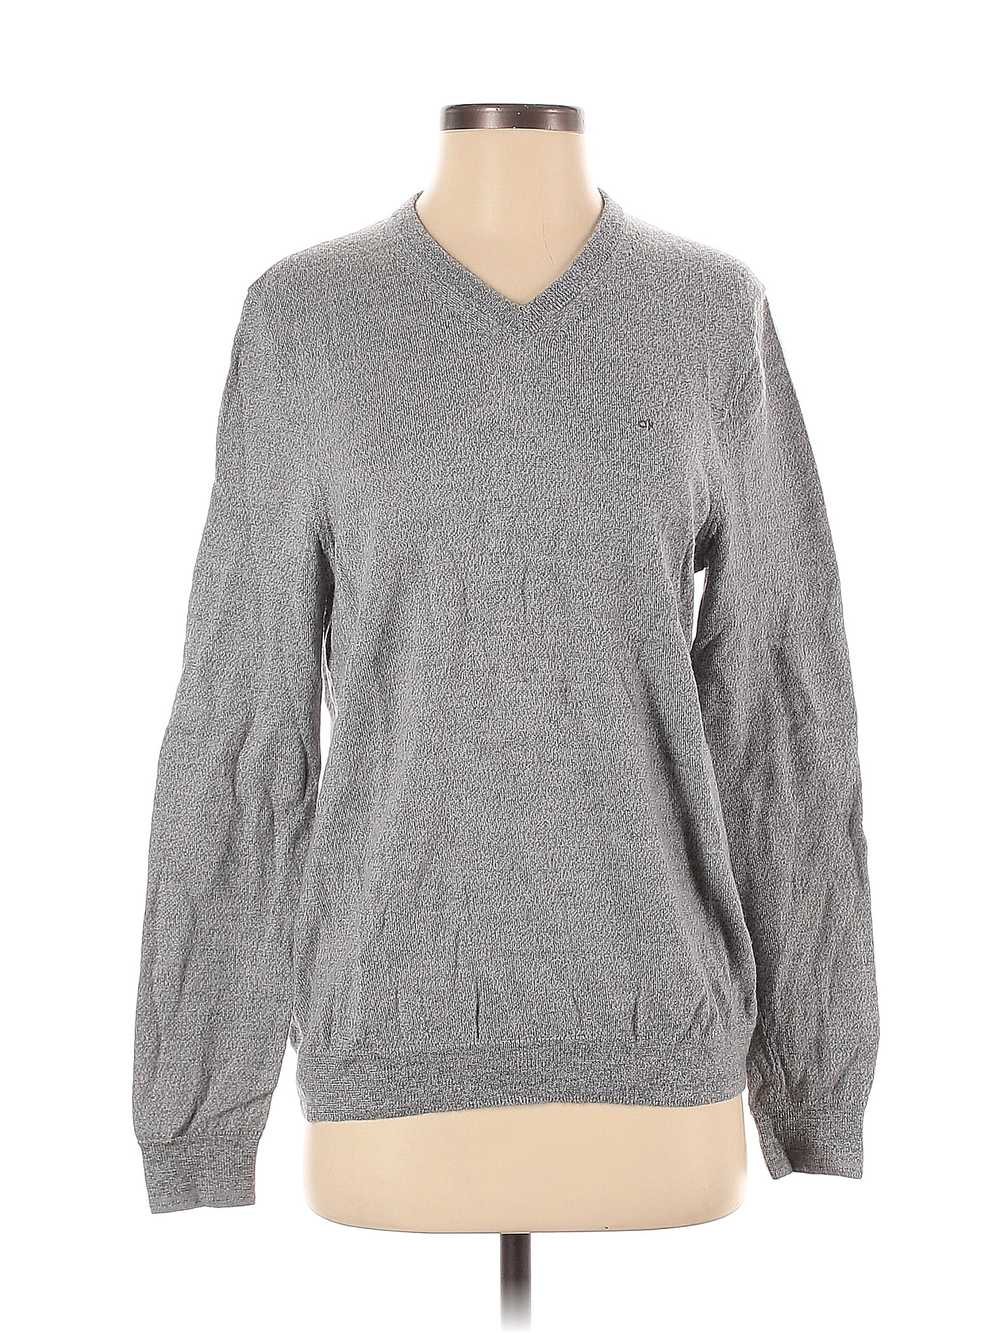 Calvin Klein Women Gray Wool Pullover Sweater S - image 1